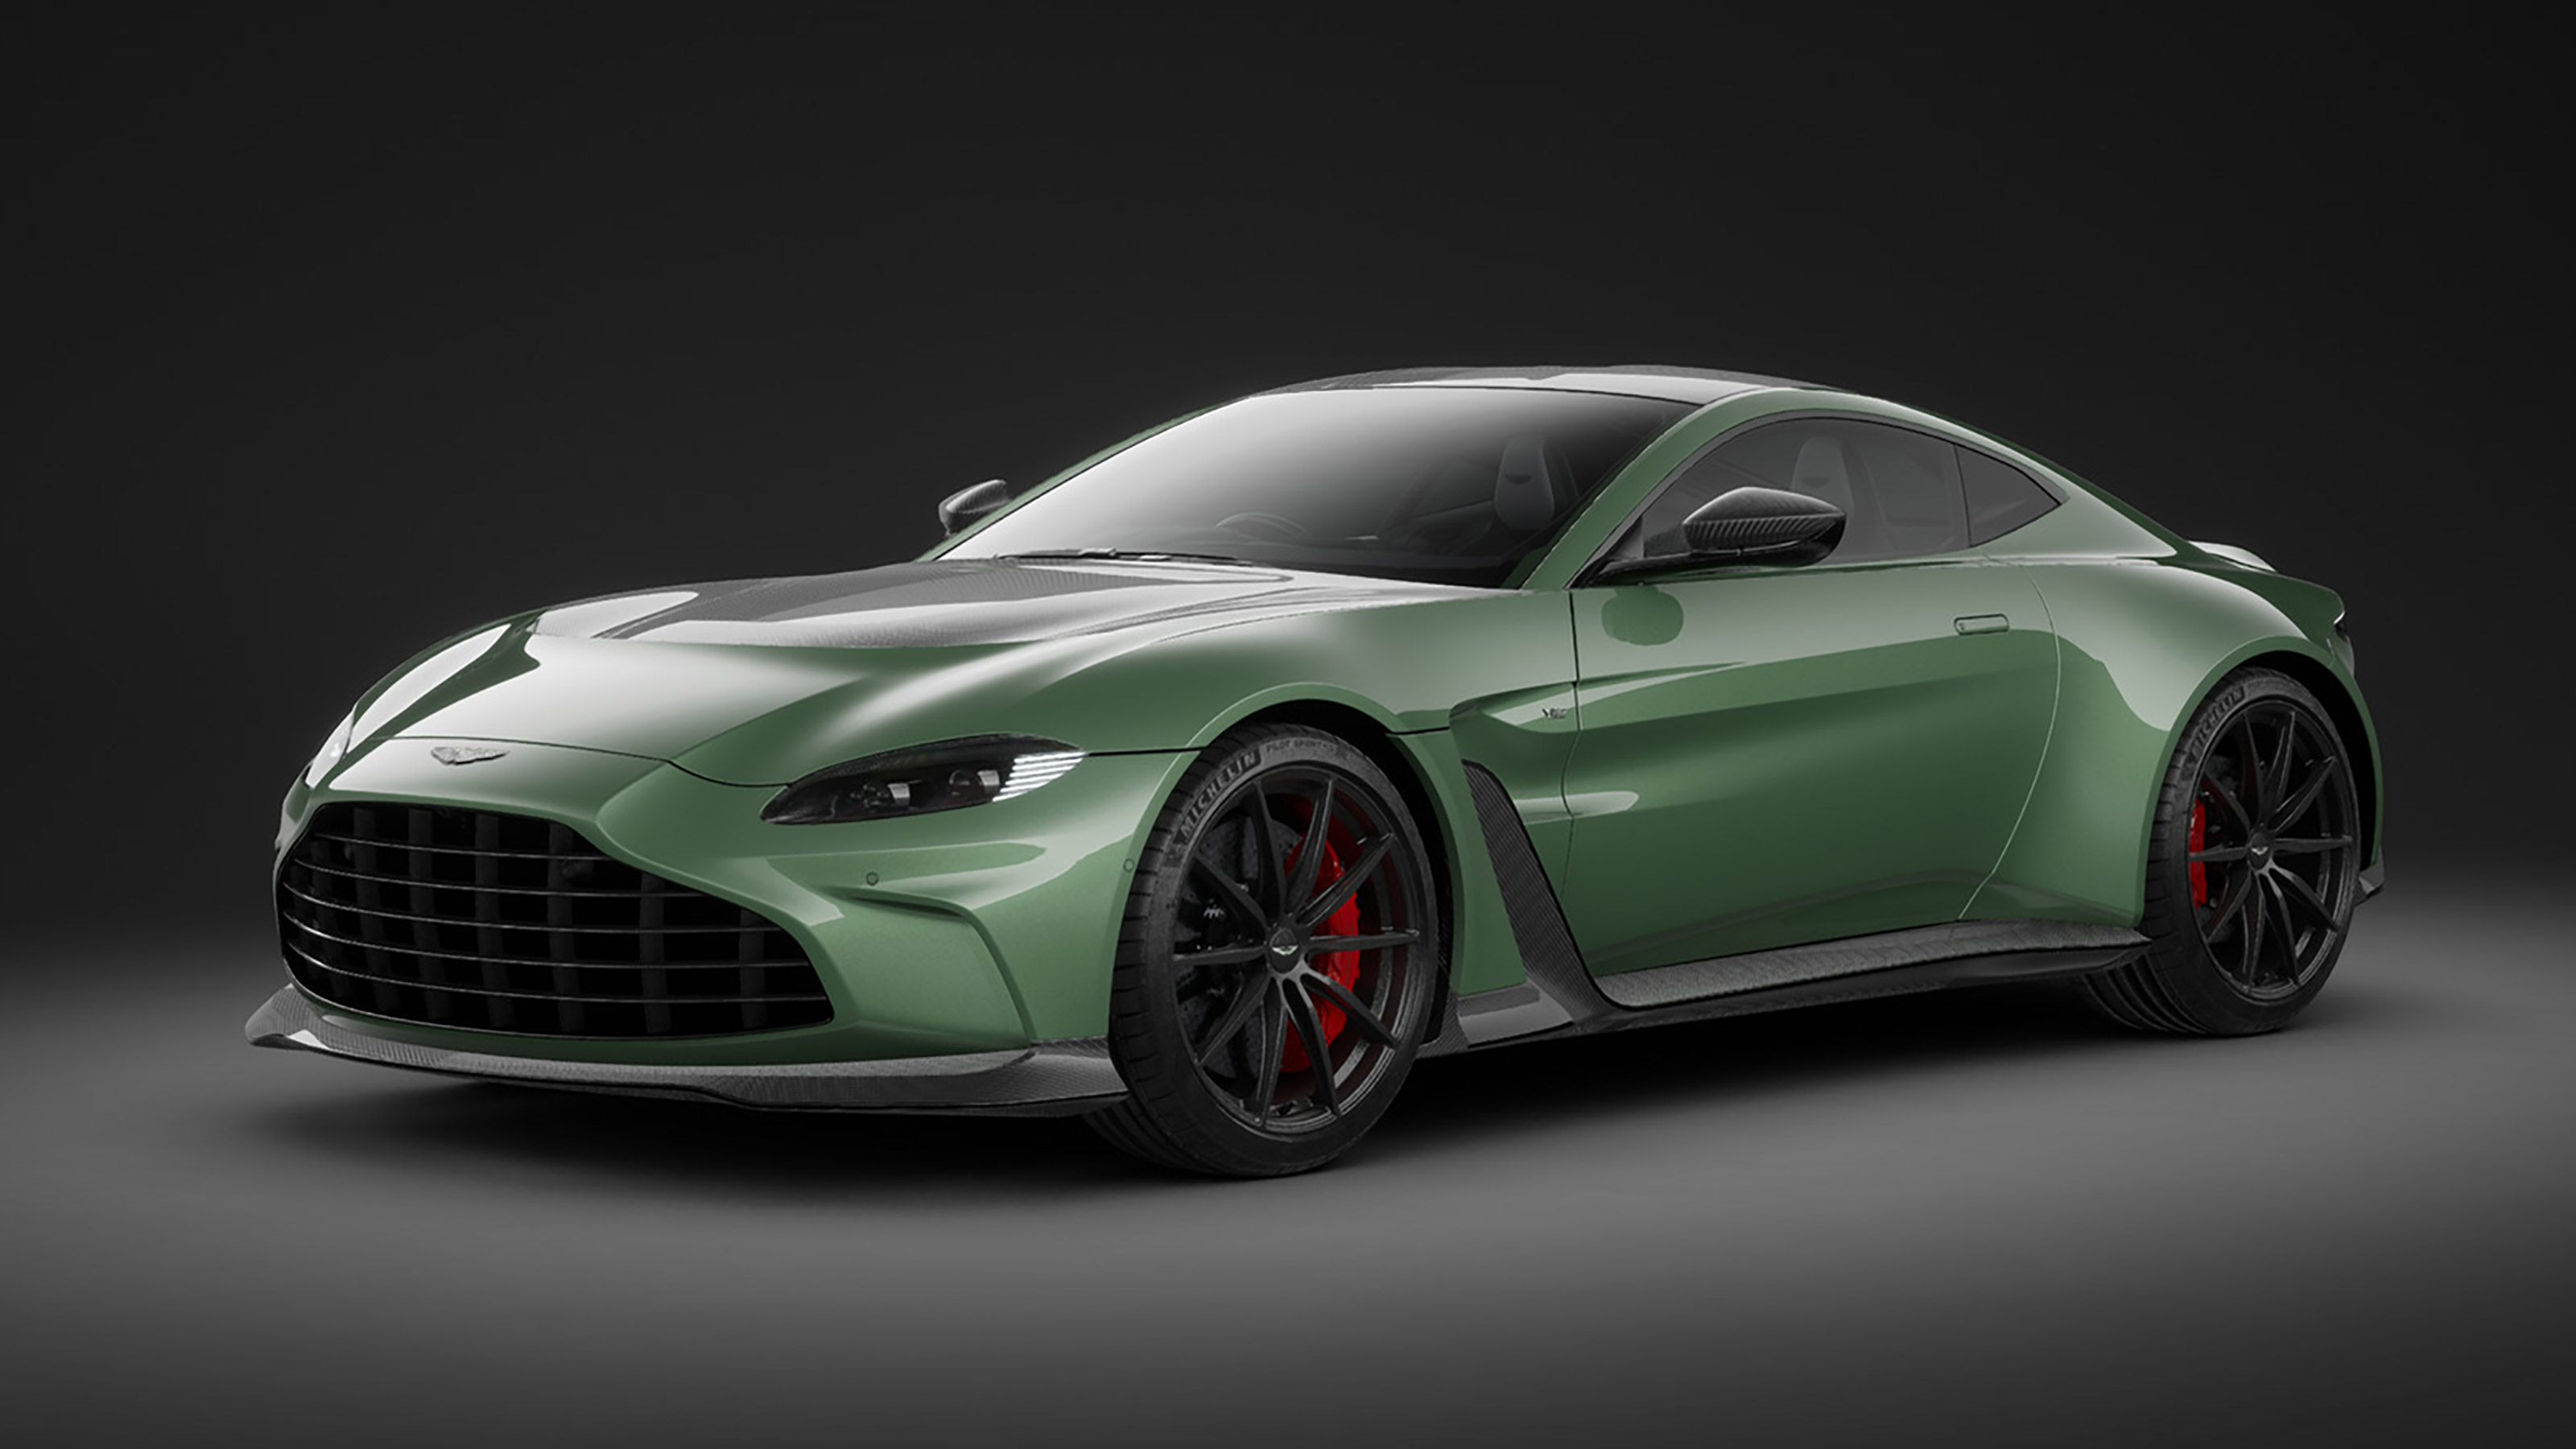 Limited Run Aston Martin V12 Vantage Revealed With 690bhp